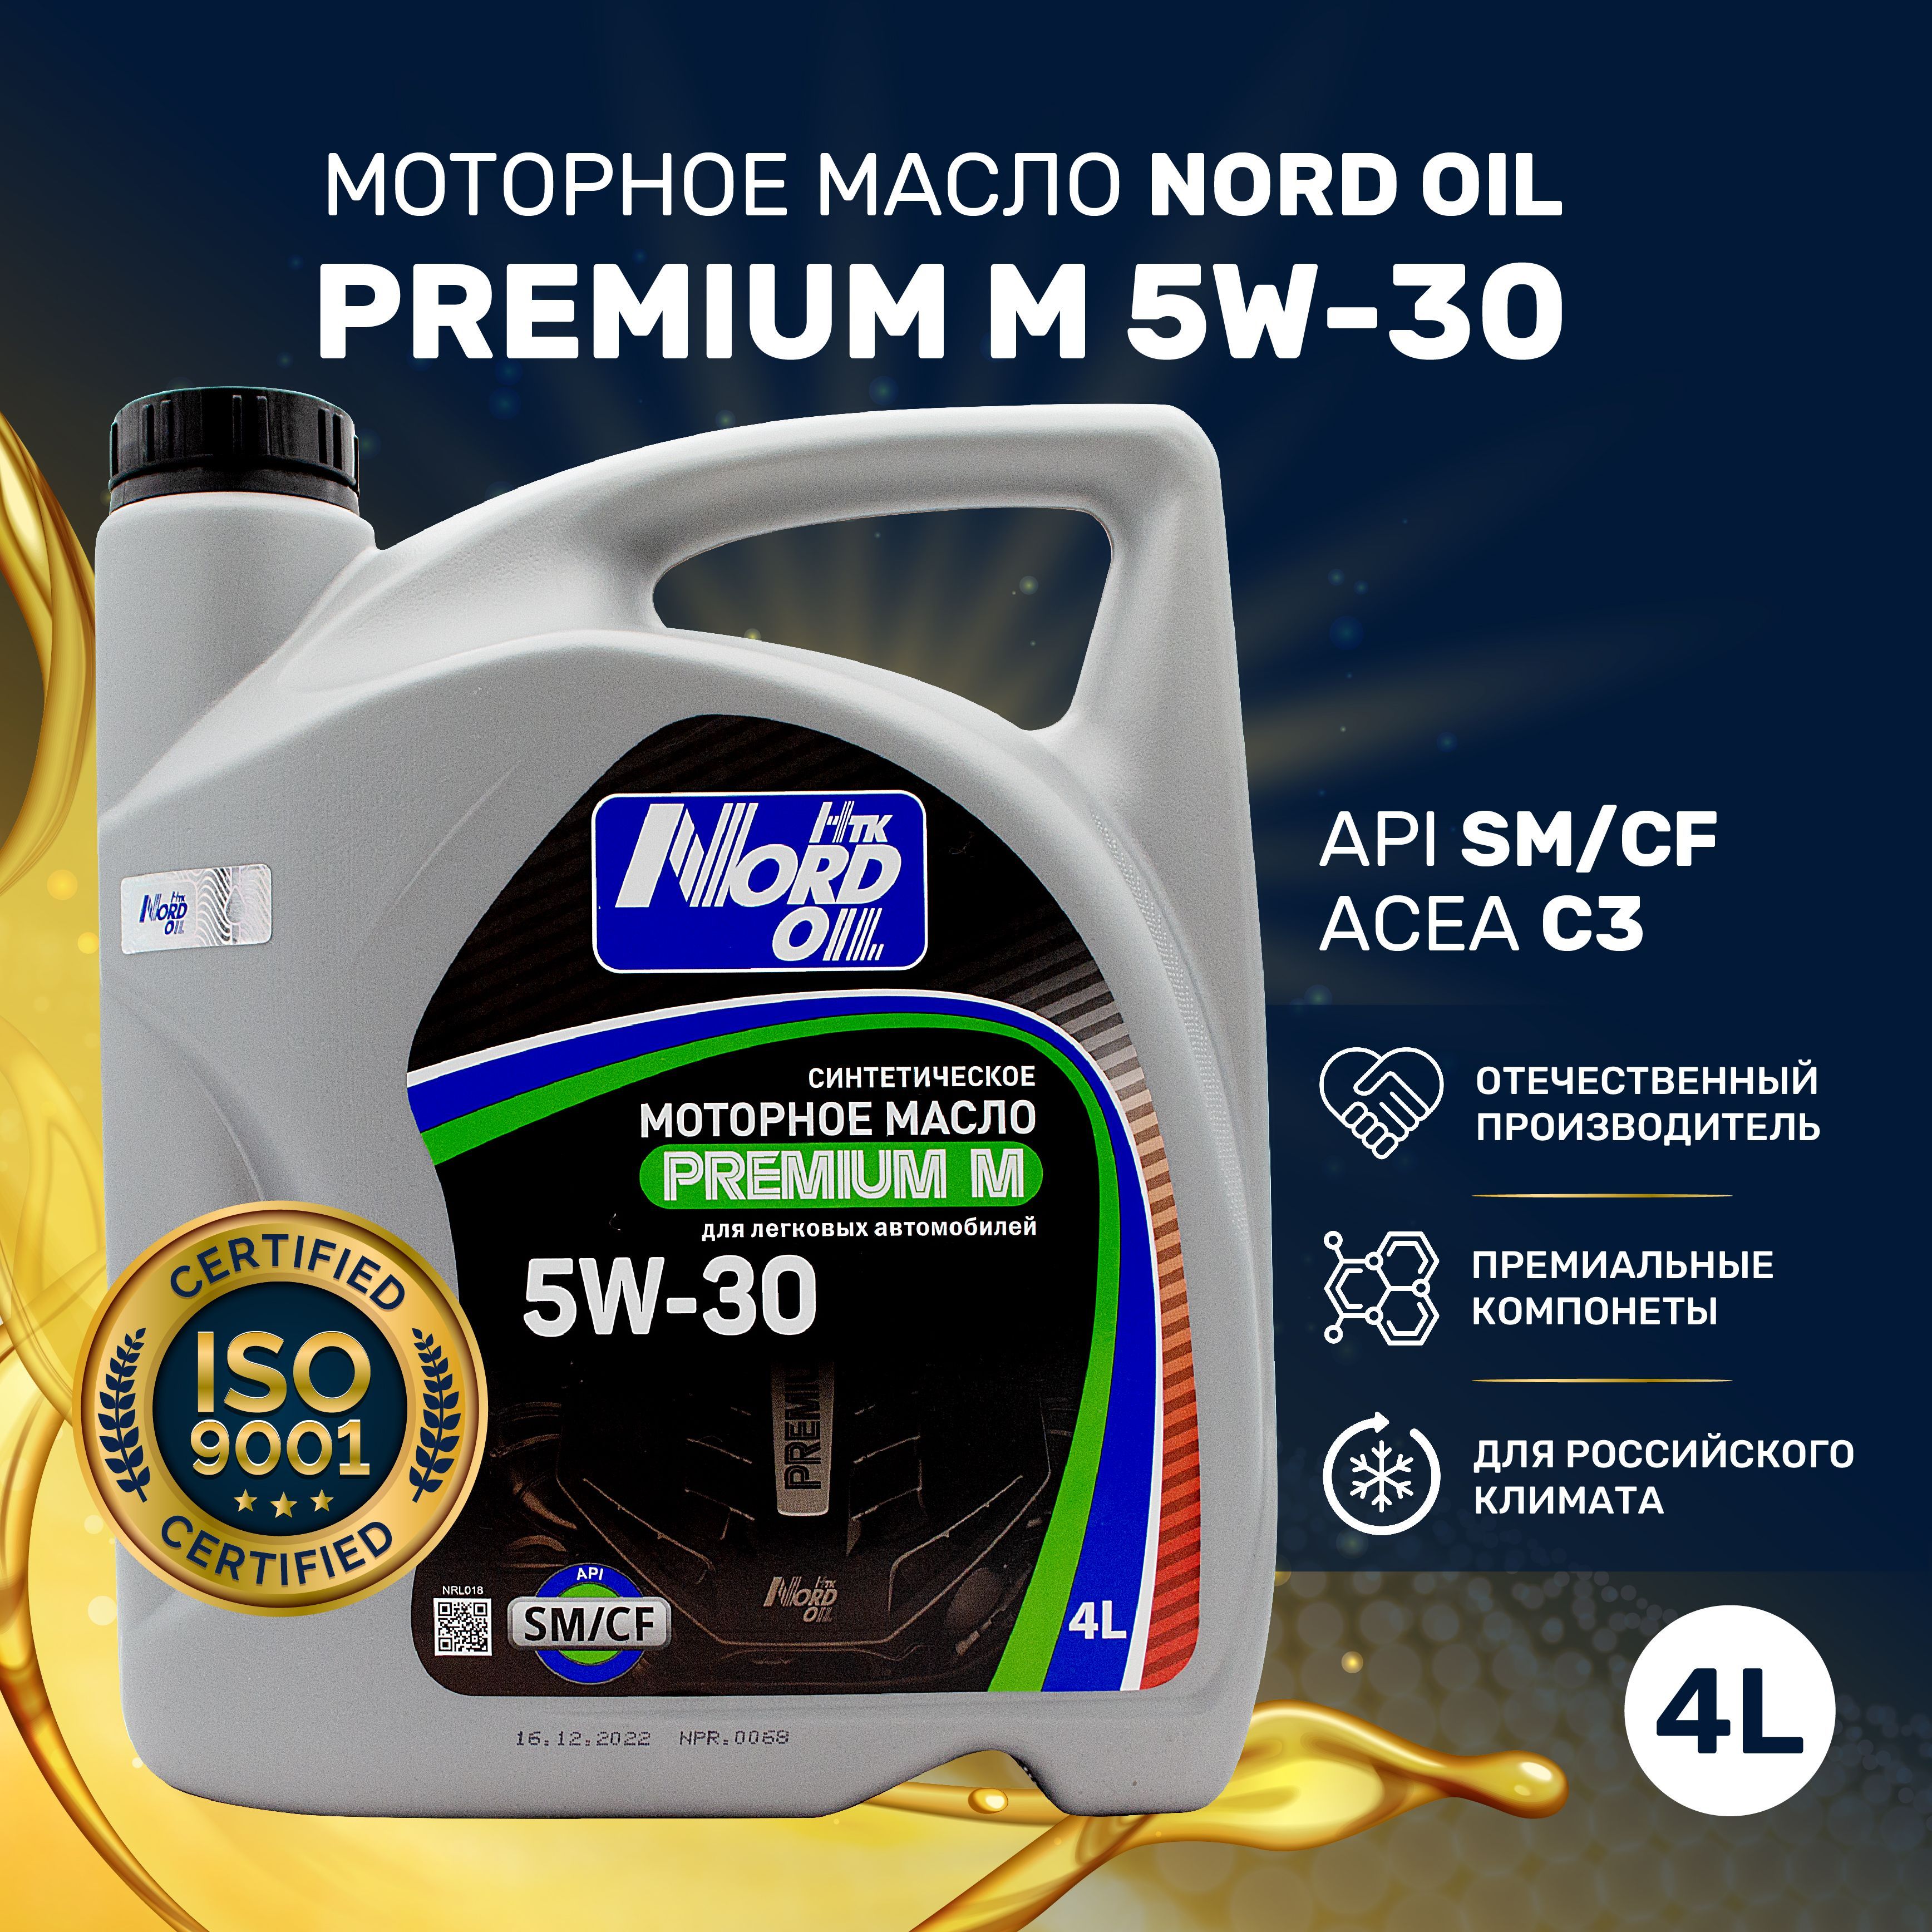 Nord Oil Premium m 5w30. Nord Oil Premium n c3 5w-30 SN/CF. Nord Oil Premium 5 литров. НТК Nord Oil nrt033. Масло 5w40 солярис